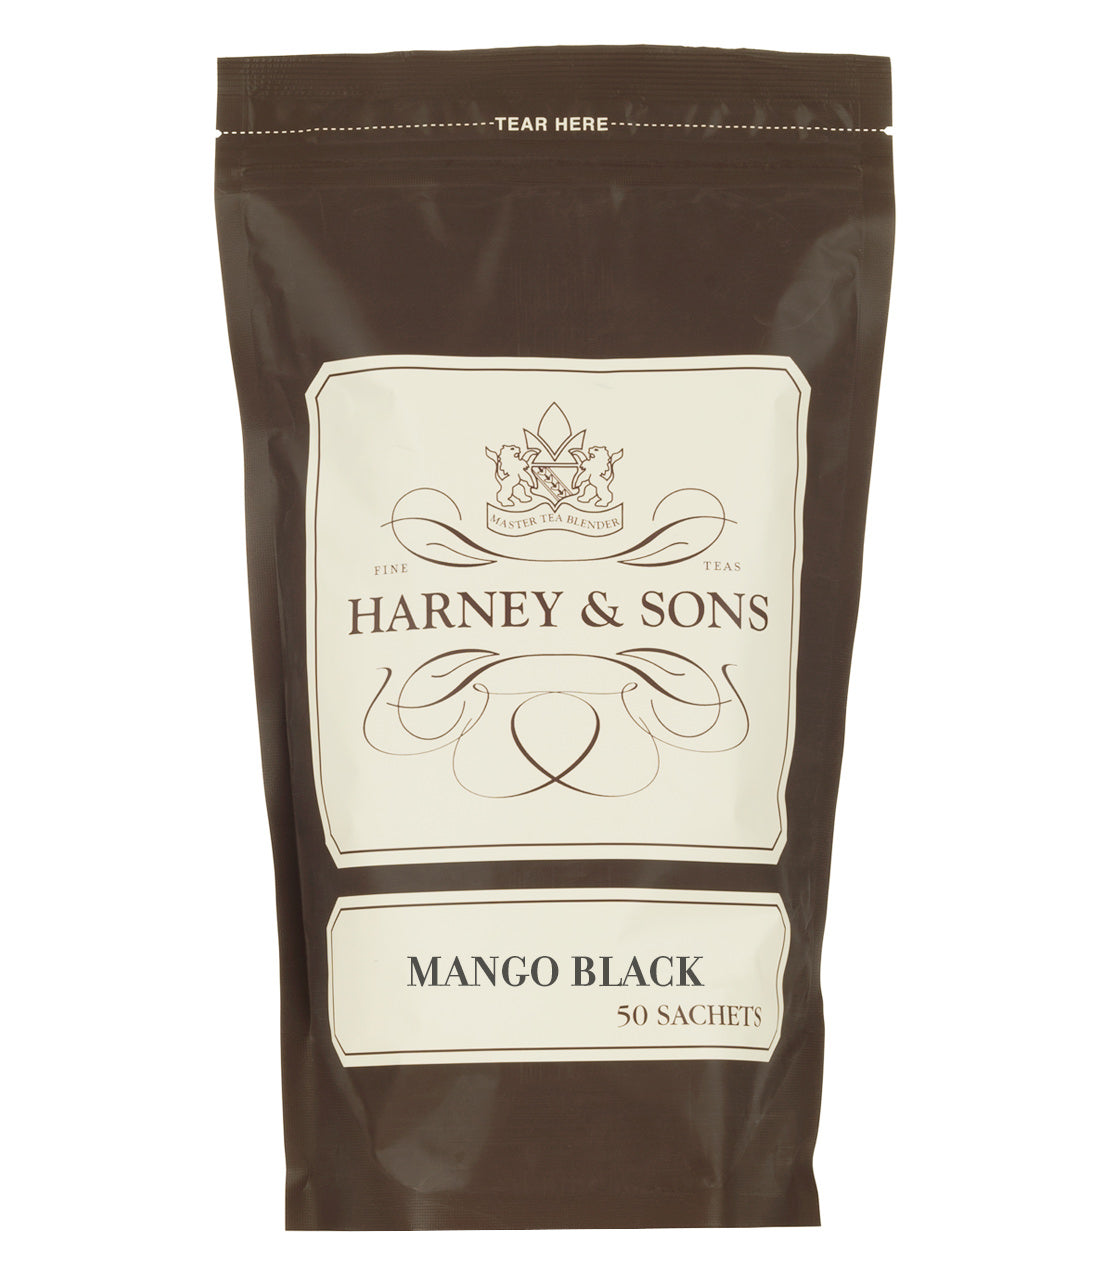 Mango Black - Sachets Bag of 50 Sachets - Harney & Sons Fine Teas